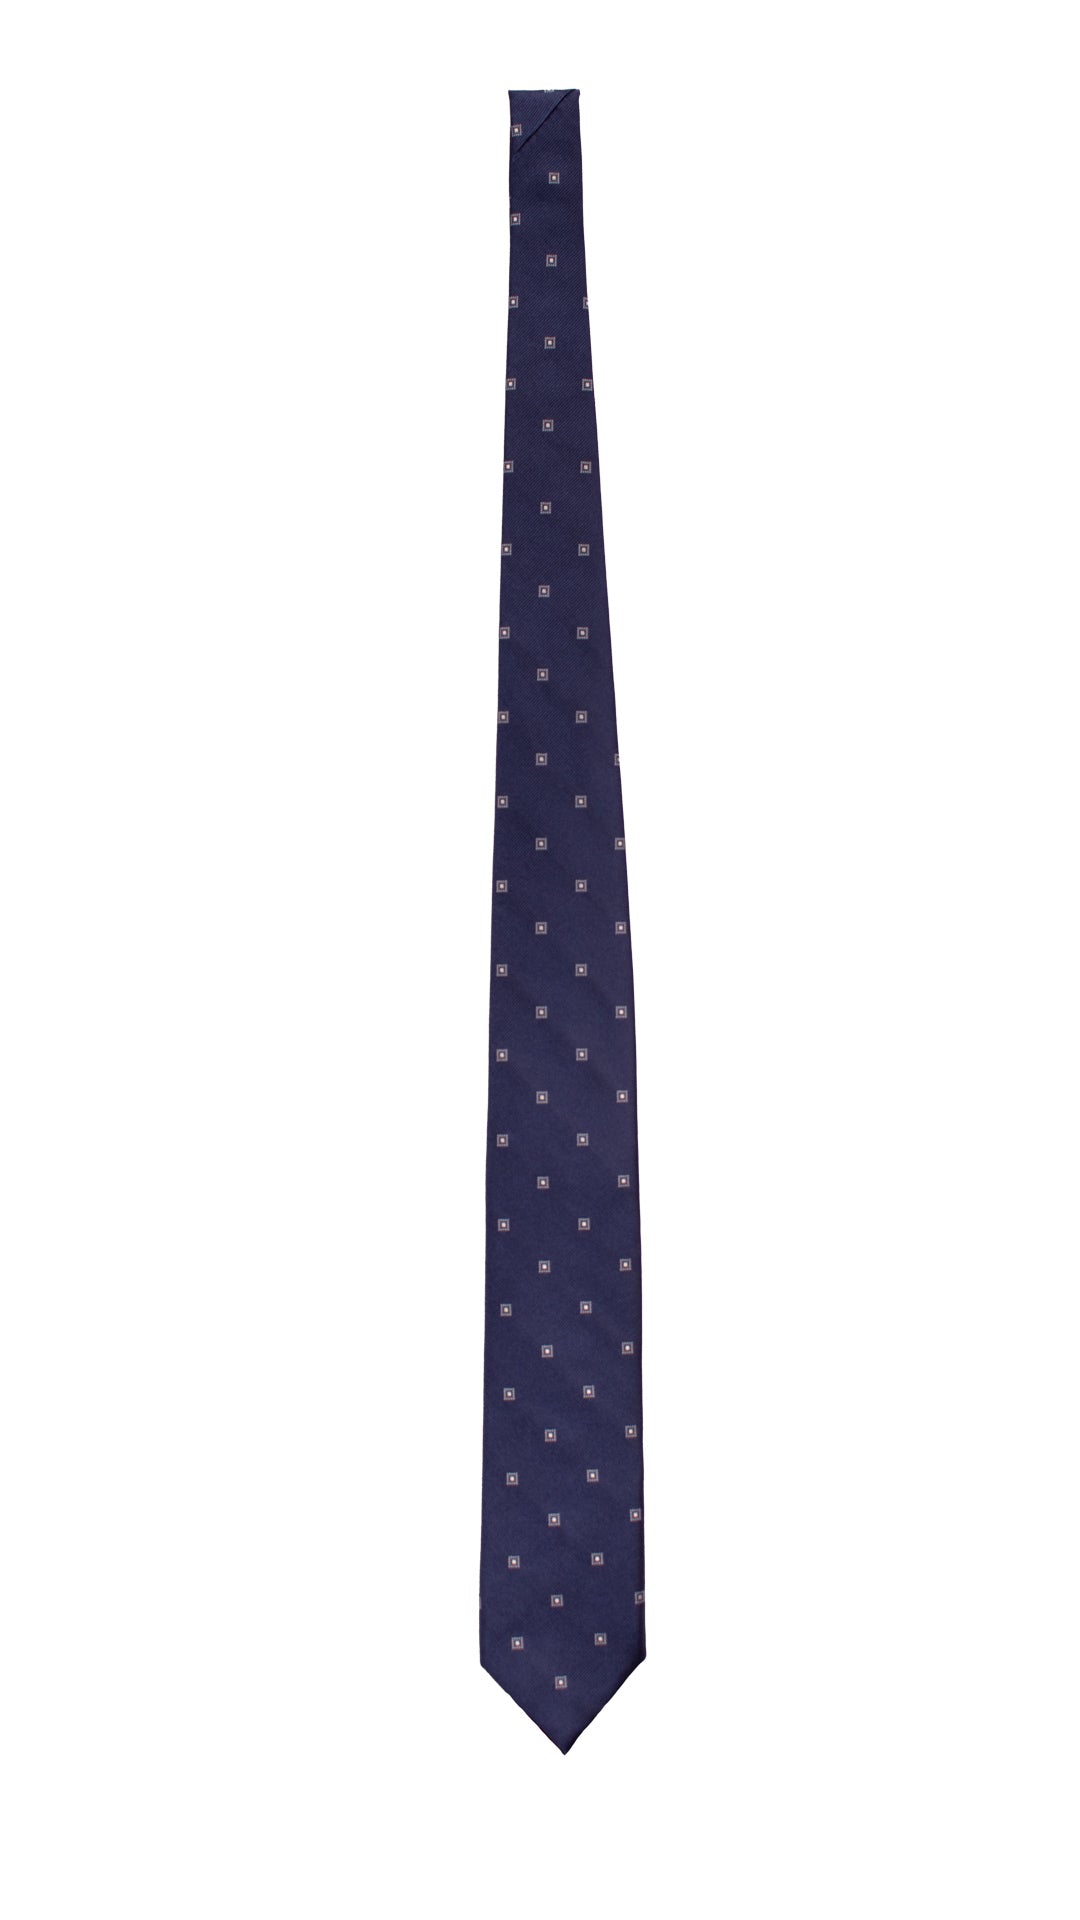 Cravatta da Cerimonia di Seta Blu Navy Fantasia Bianca CY2748 Intera